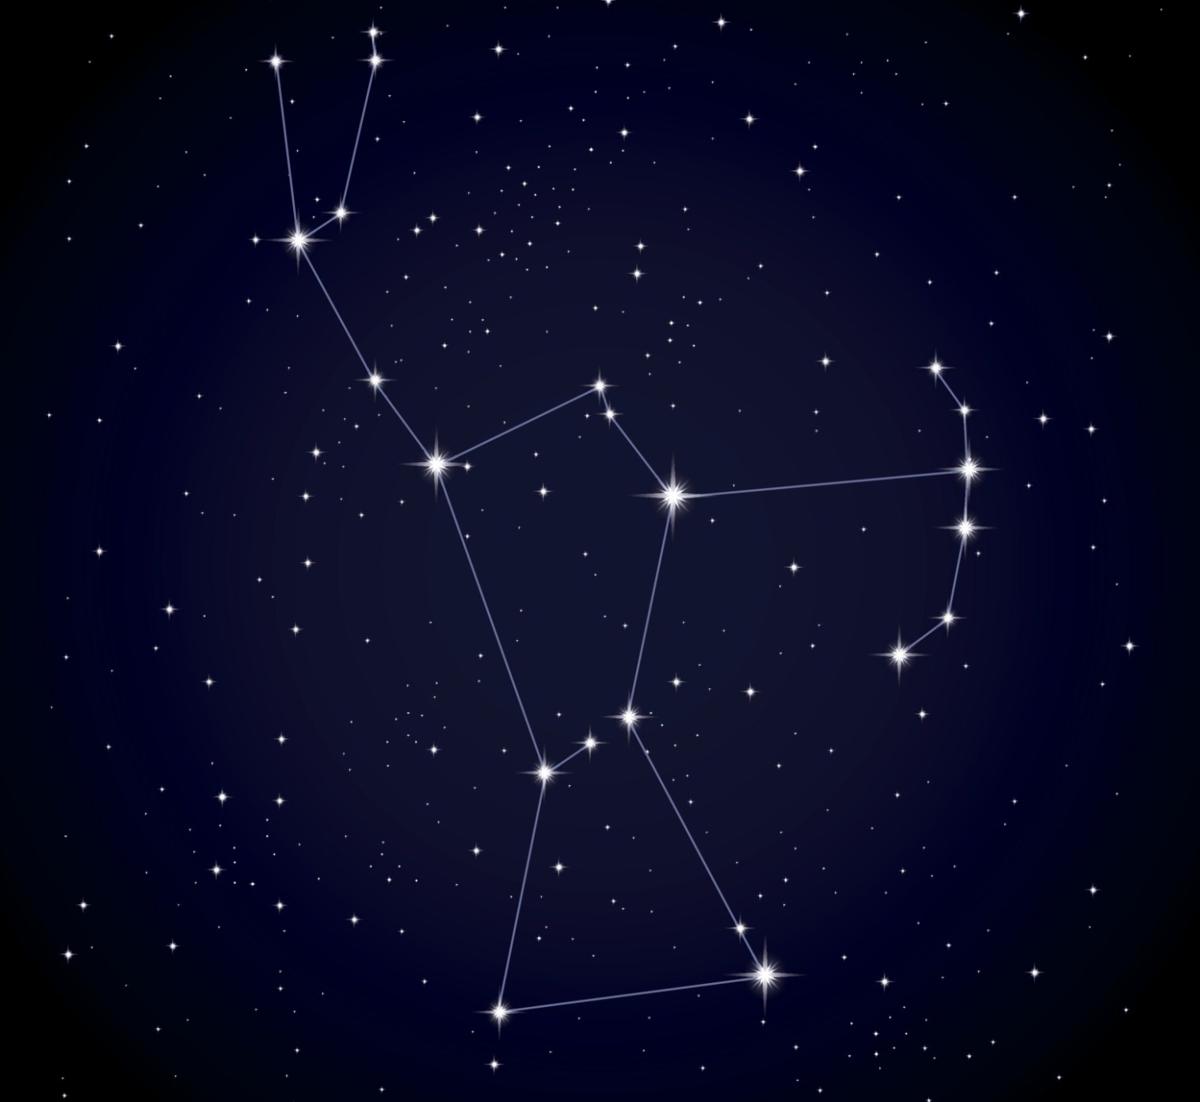 Orion constellation - Wikipedia